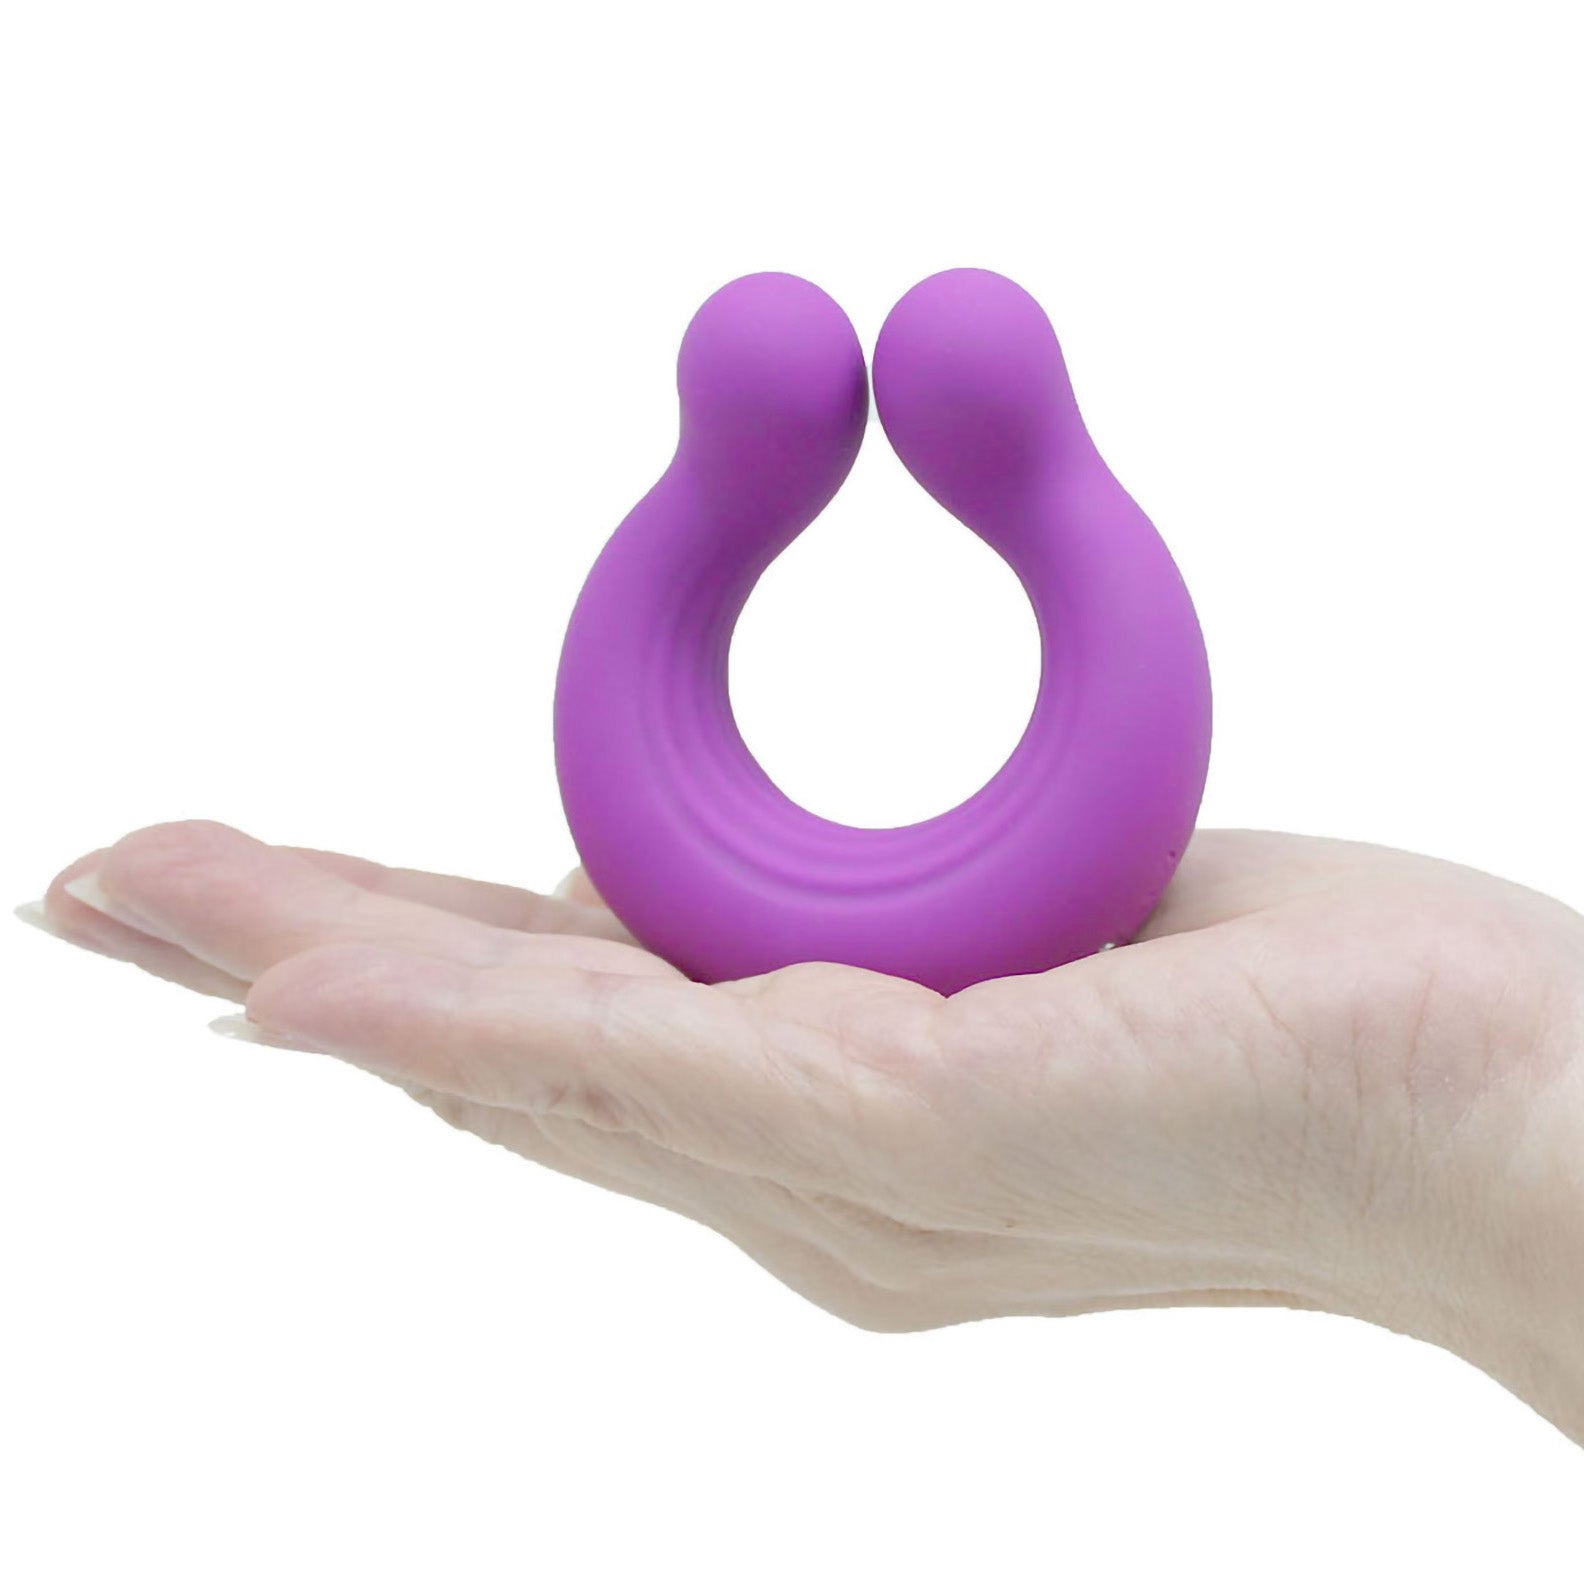 Remote Control Vibrating Penis Cock Ring Clit Nipple Vibrator Couple Sex Toys